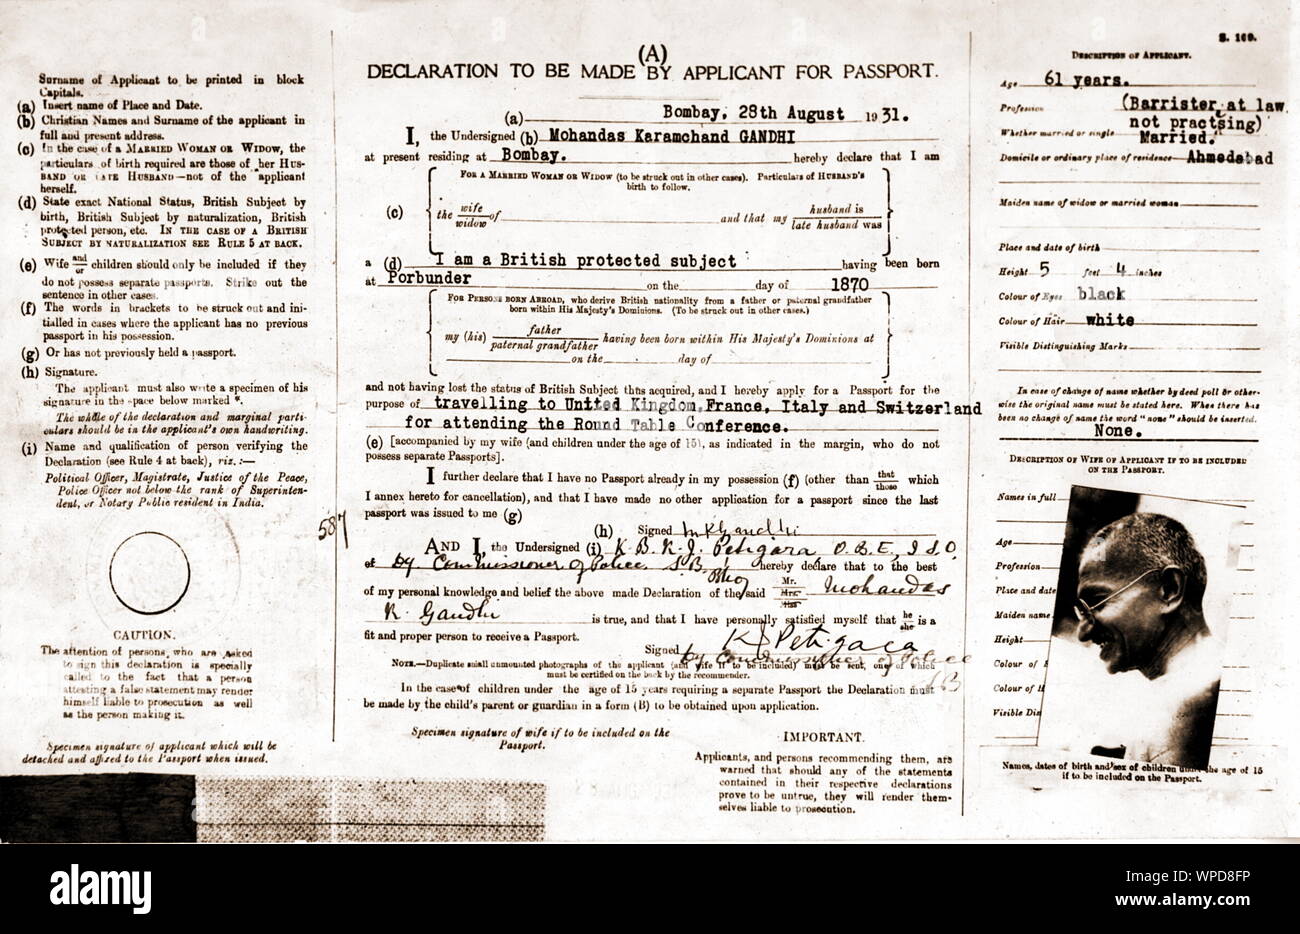 Mahatma Gandhi passport application form for his travel to United Kingdom France Italy Switzerland Europe, India, Asia, 1931 Stock Photo